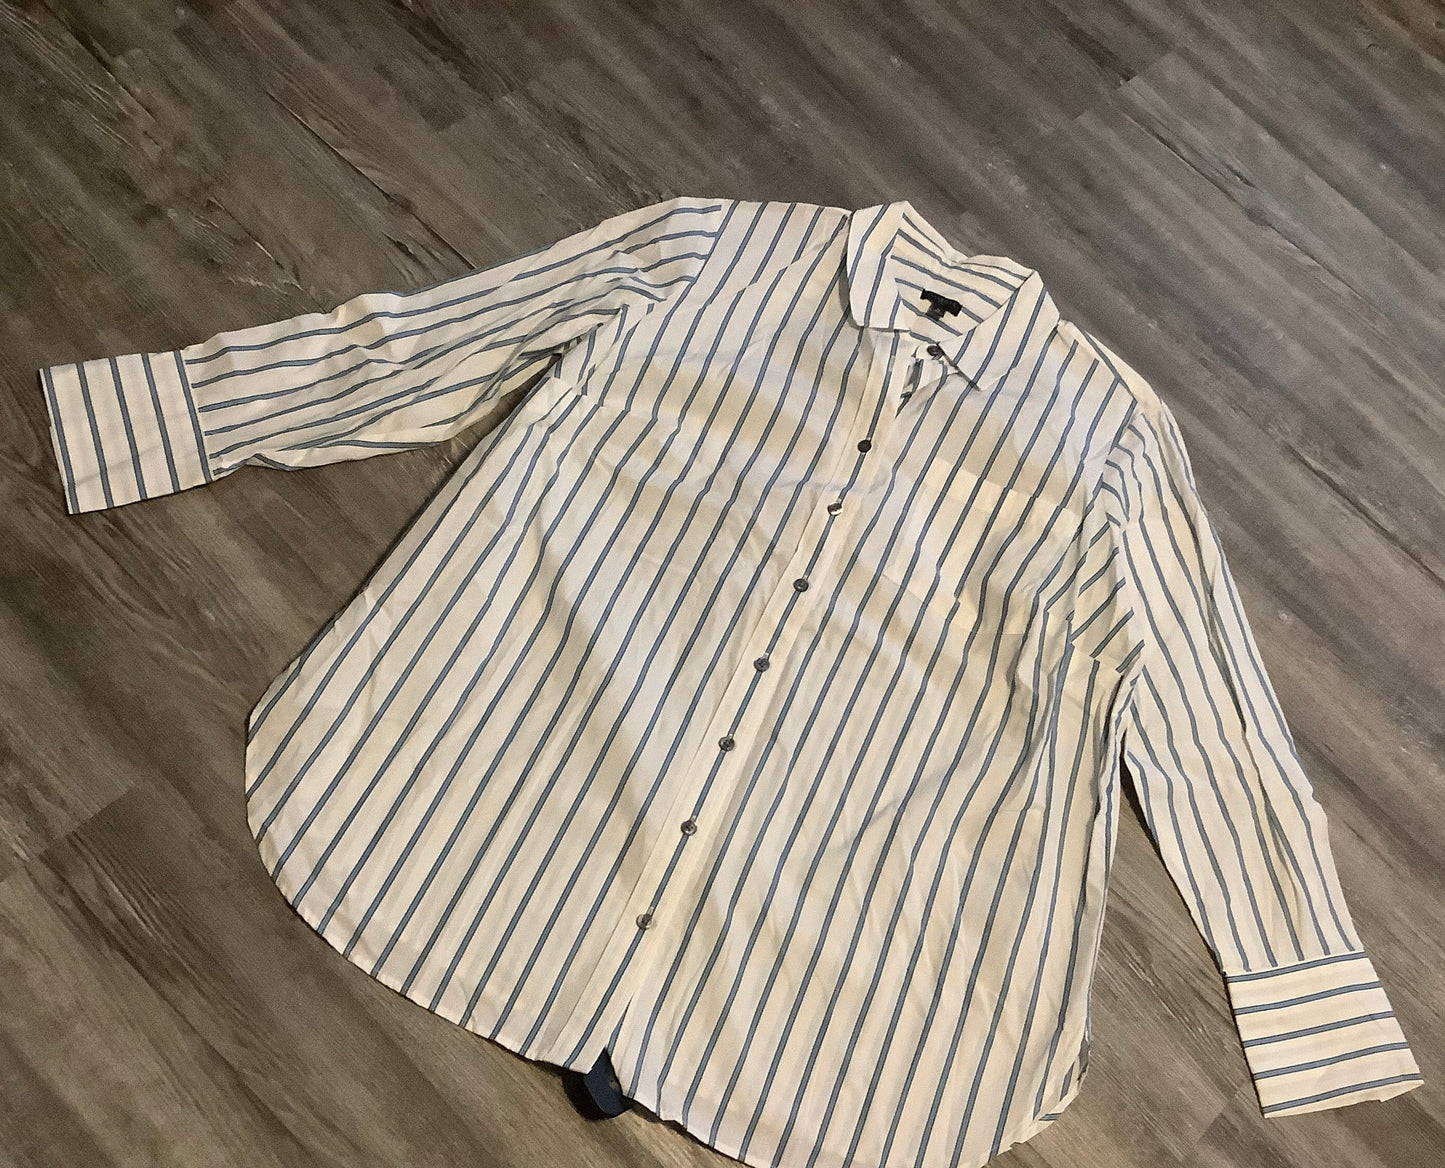 Striped Pattern Top Long Sleeve Talbots, Size 1x